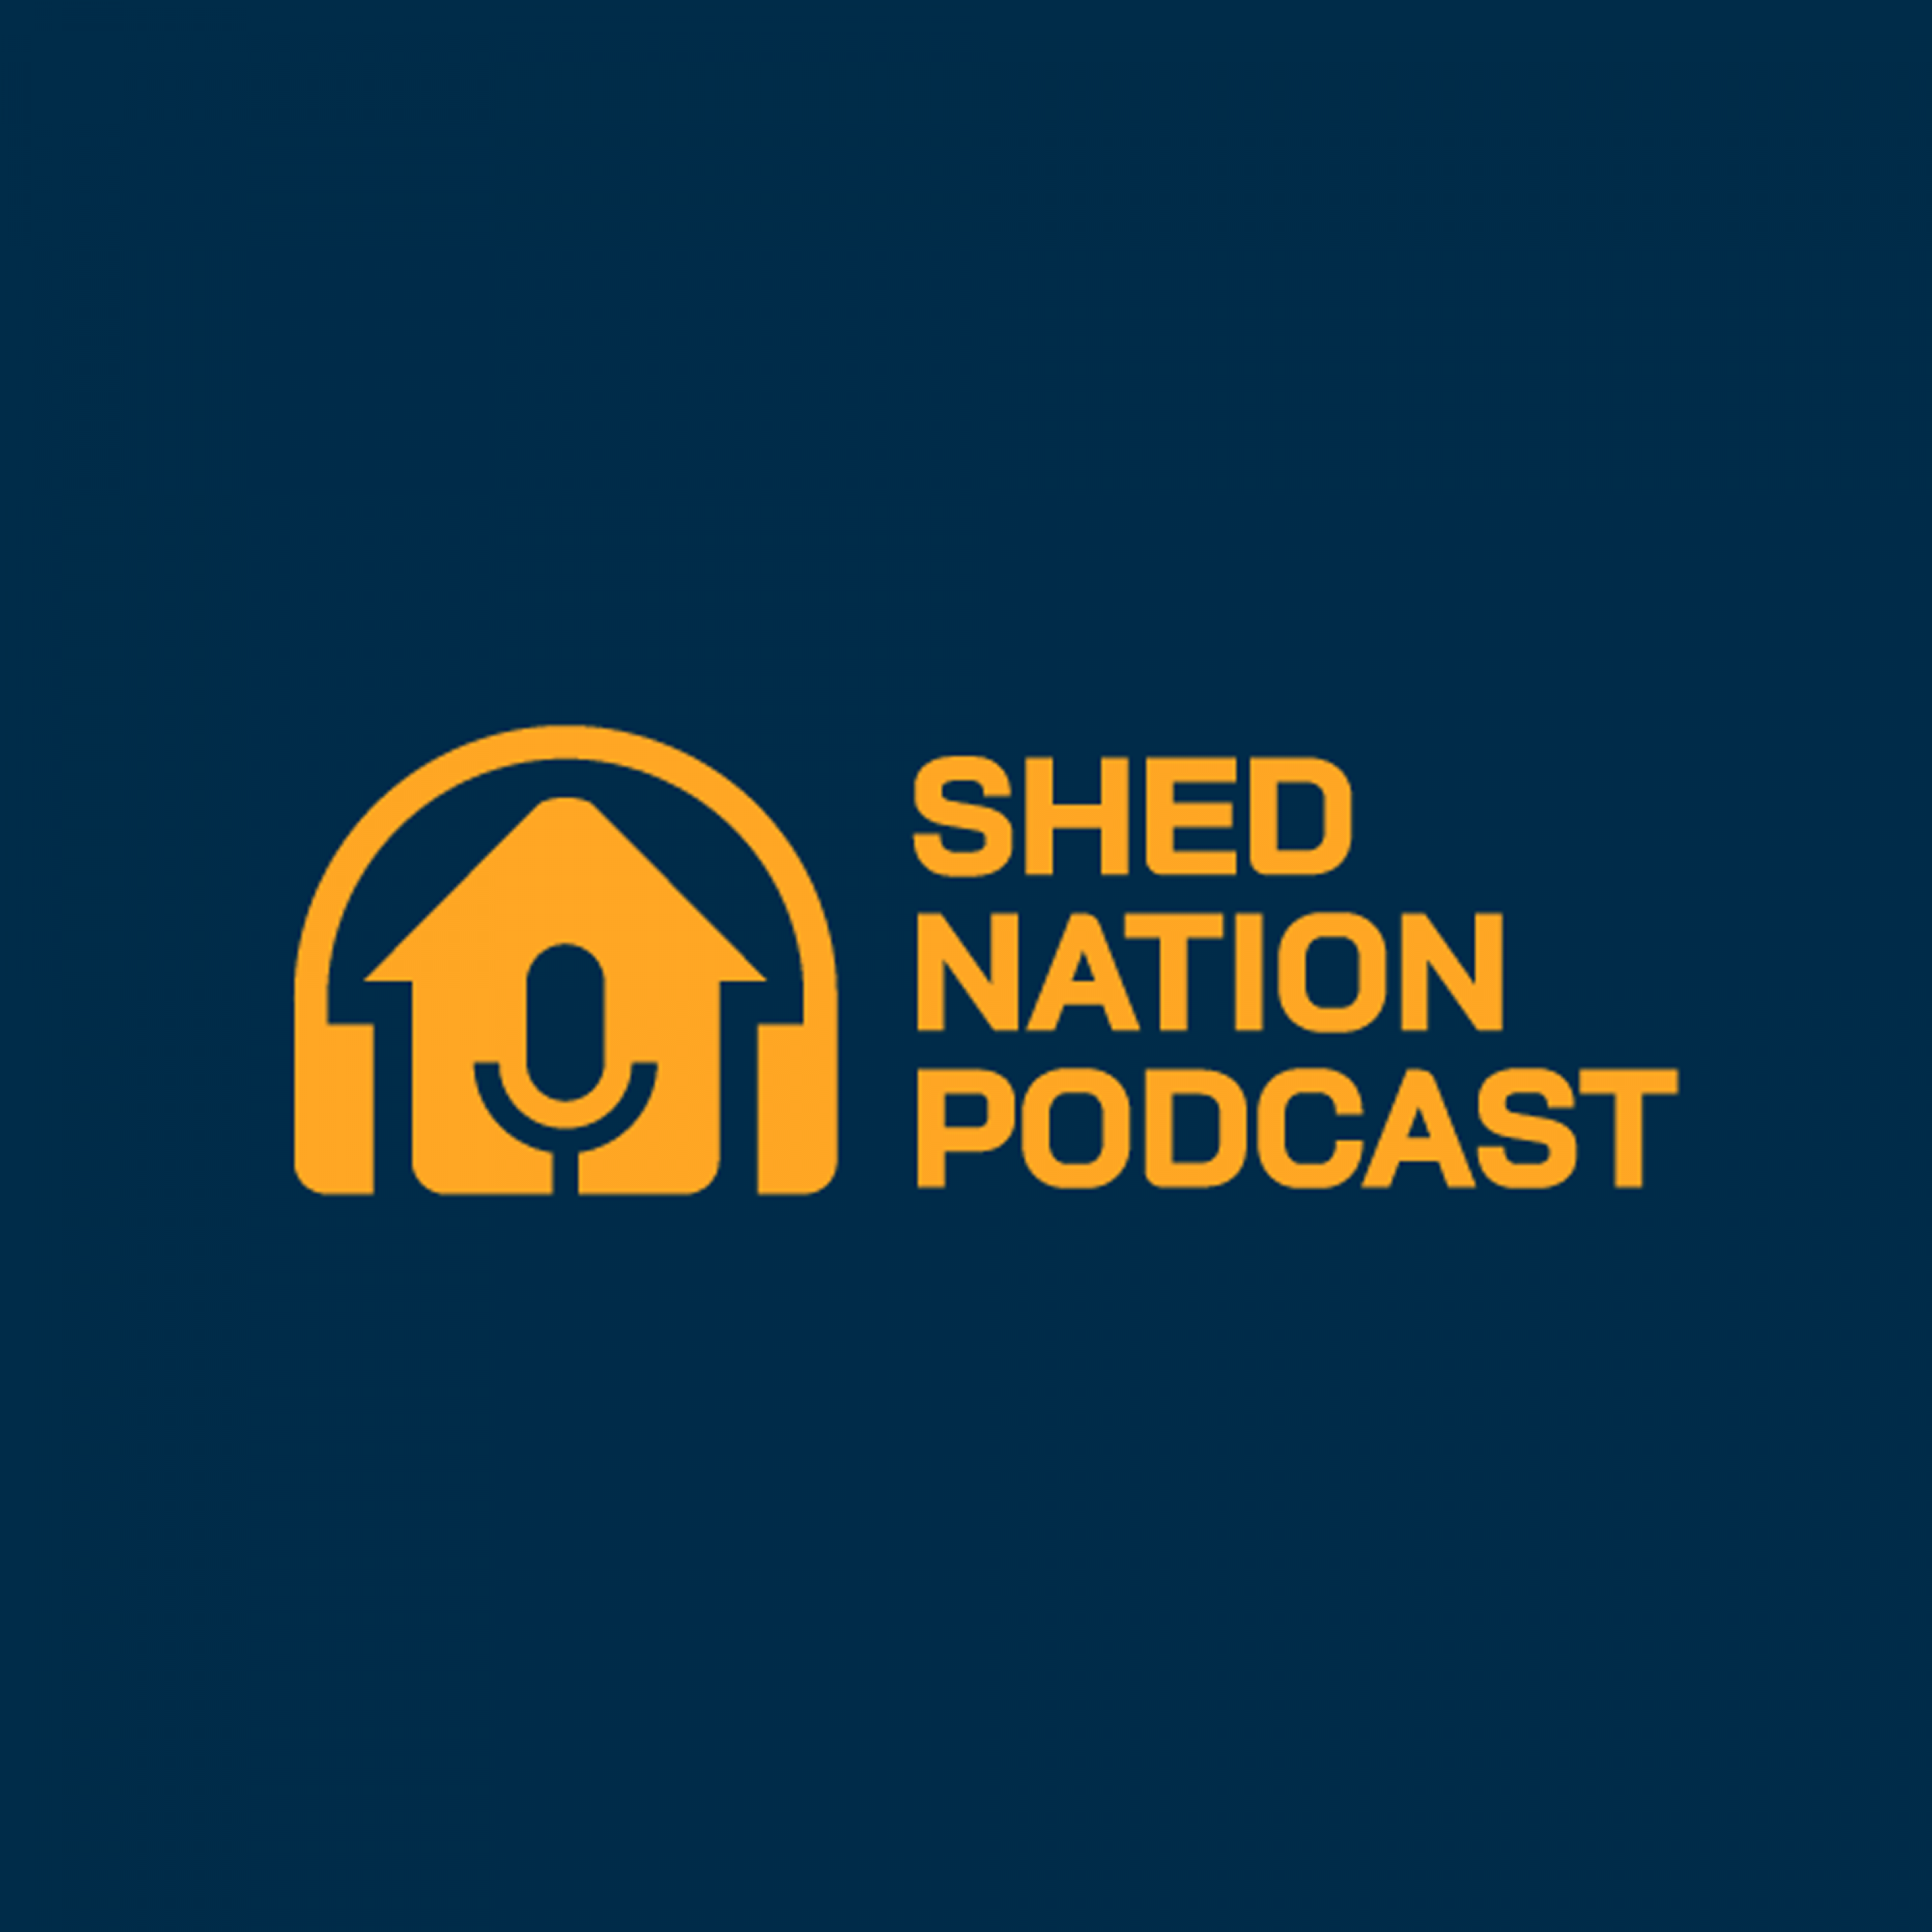 Shed Nation Podcast